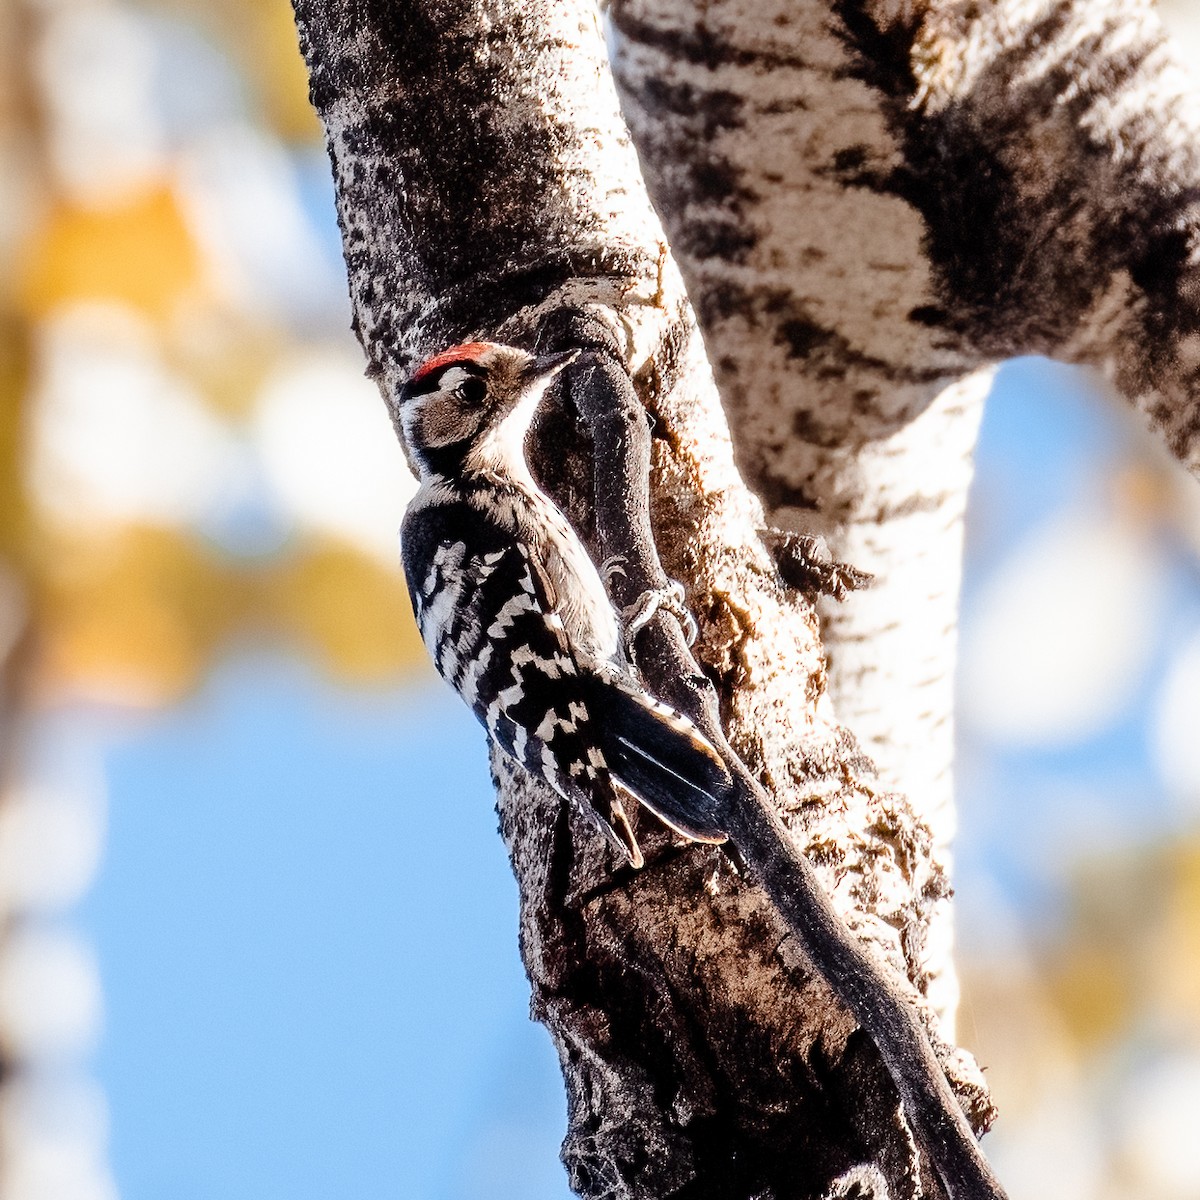 Lesser Spotted Woodpecker - Stratis Vavoudis